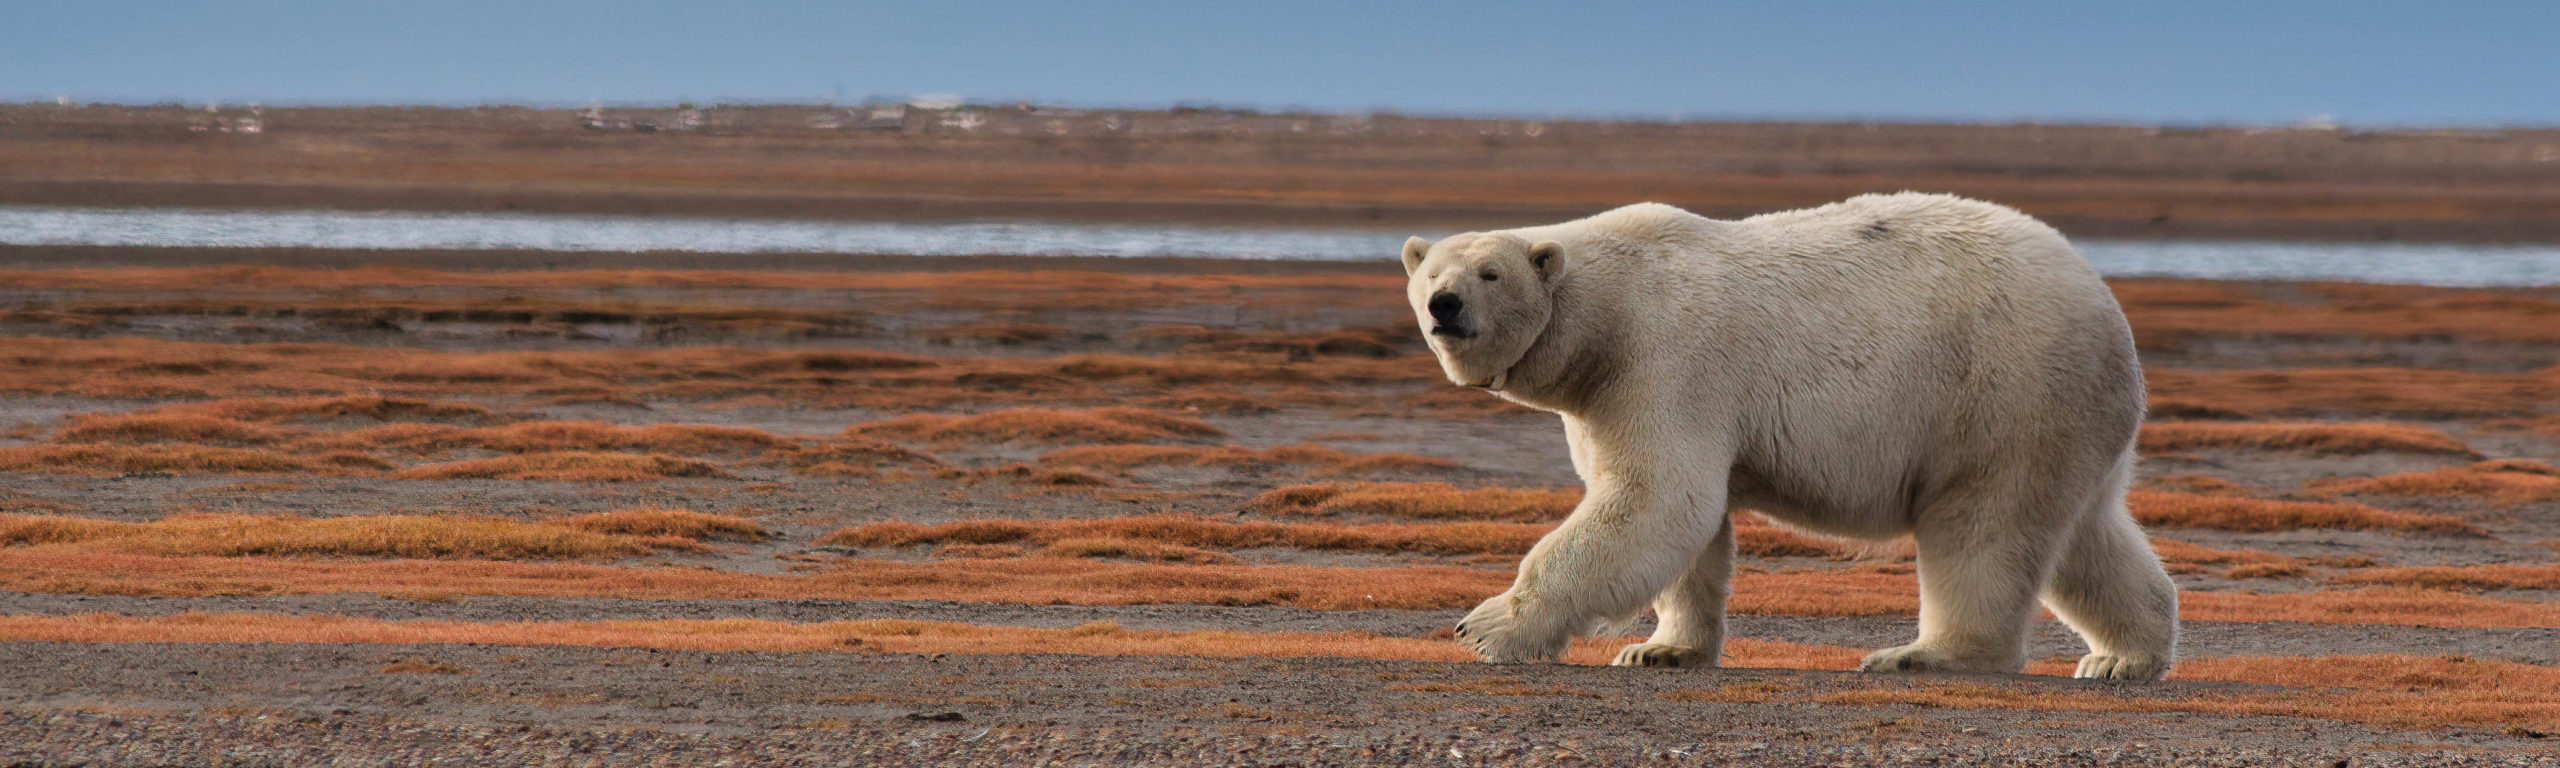 Polar bear on tundra. Pexels image by Dick Hoskins